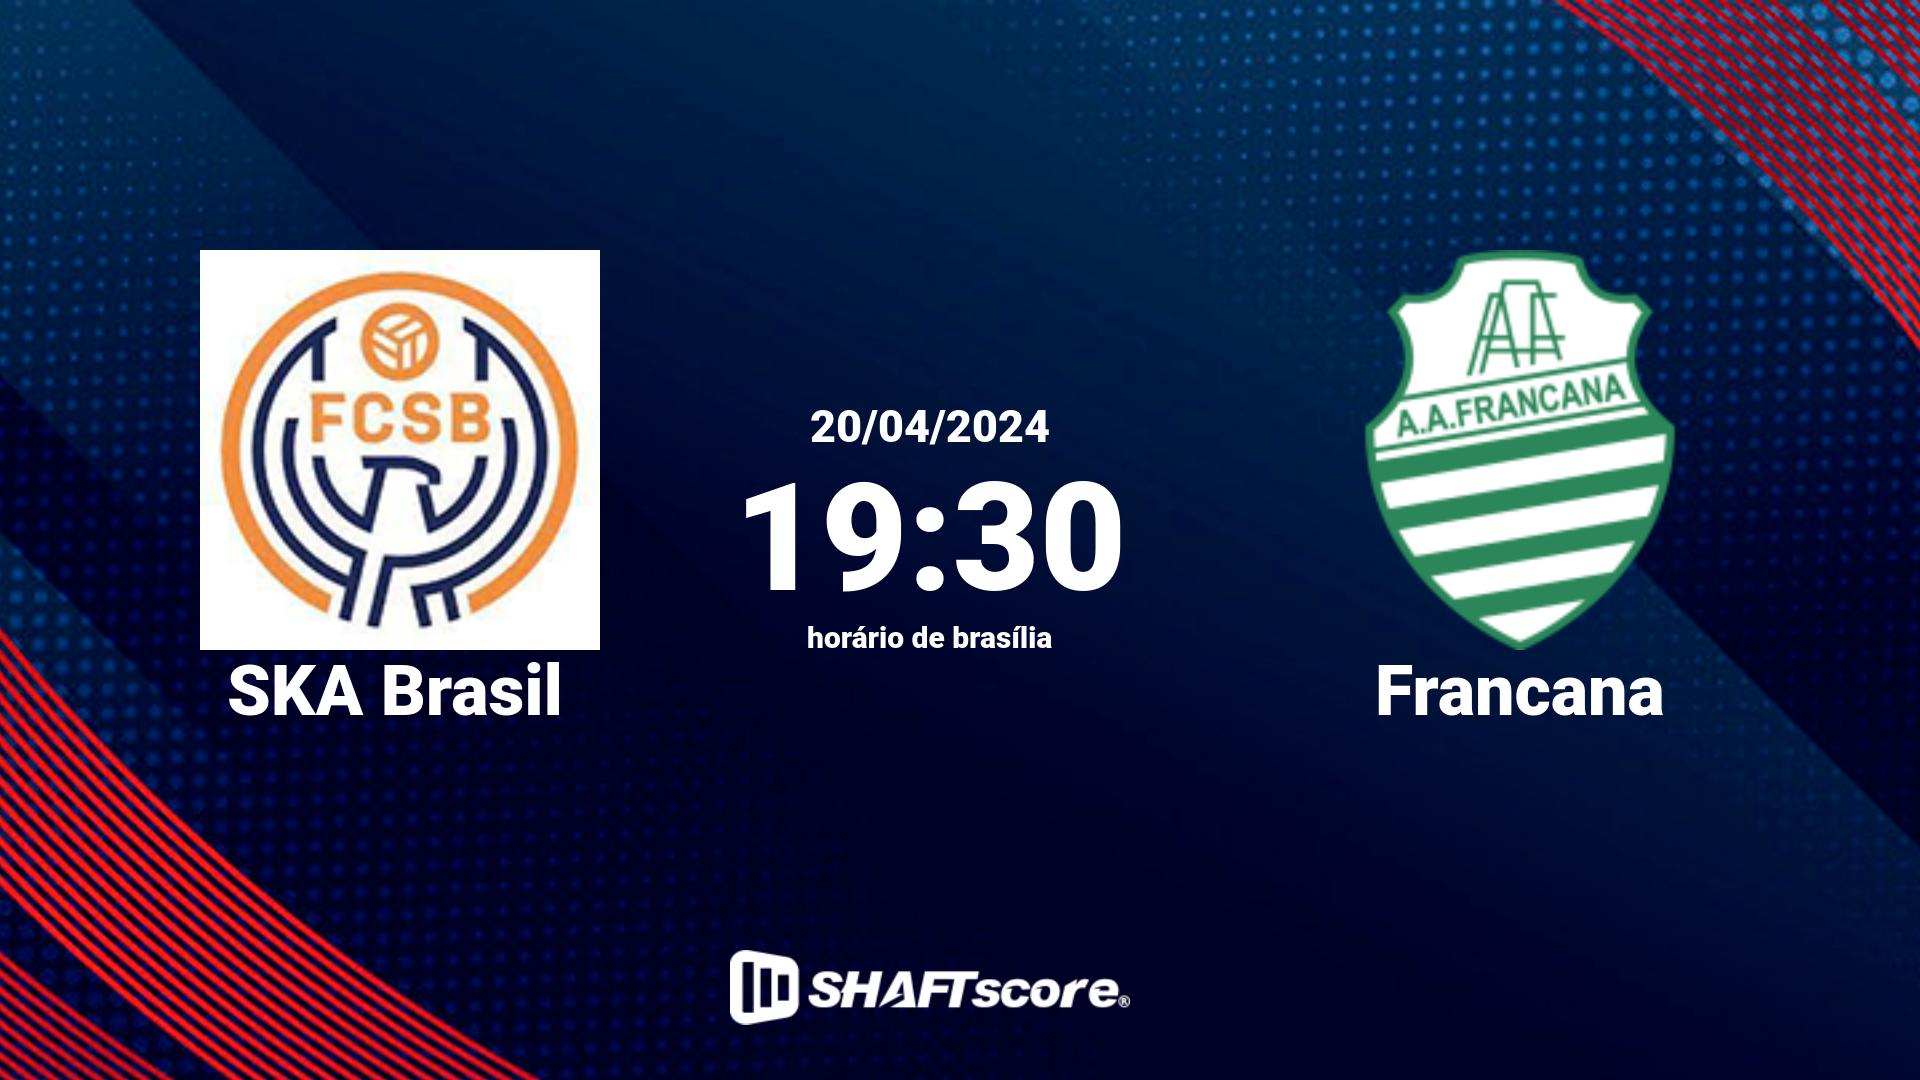 Estatísticas do jogo SKA Brasil vs Francana 20.04 19:30